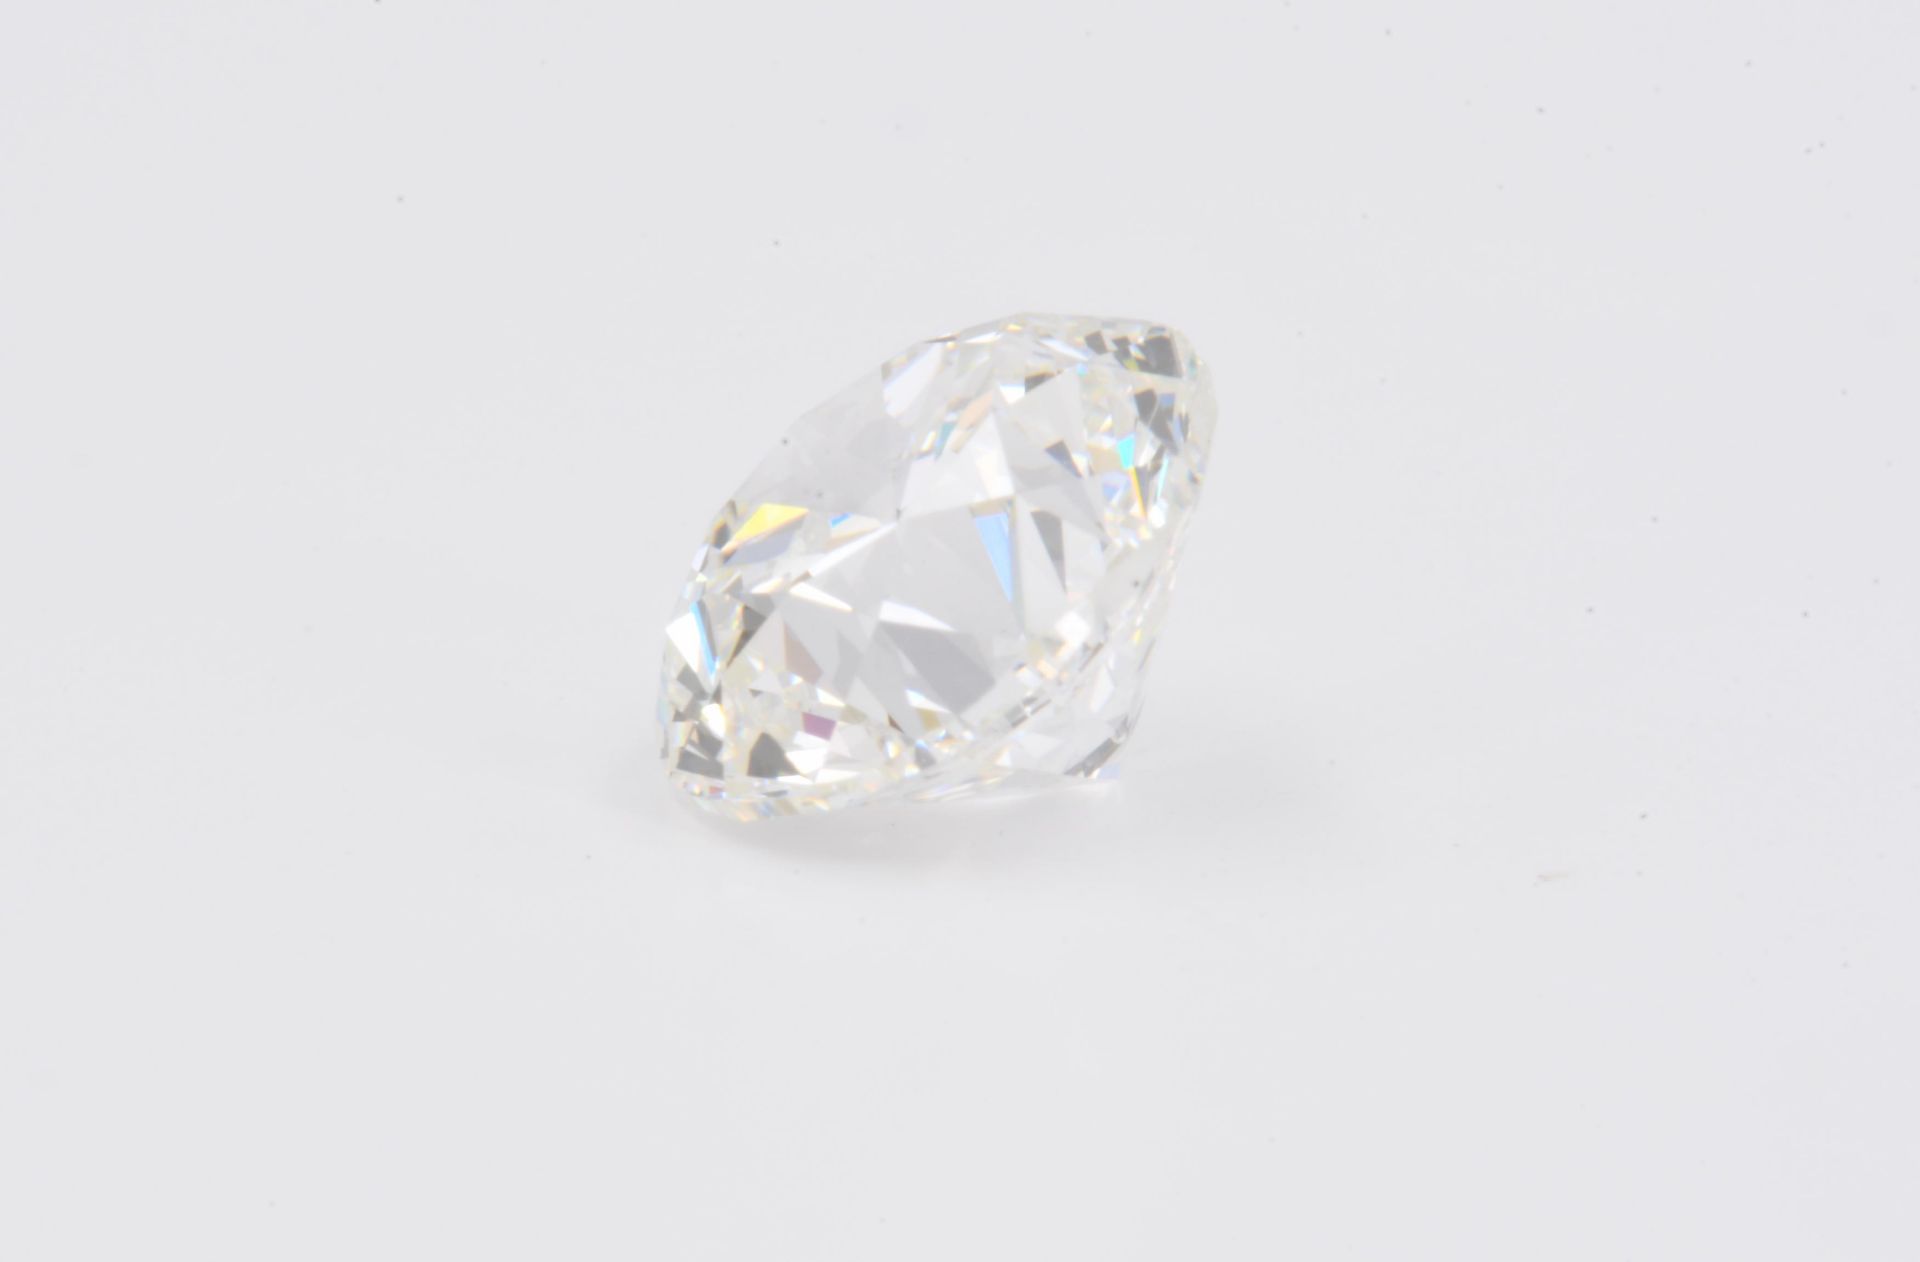 Unmounted Brilliant-cut Diamond - Image 3 of 4